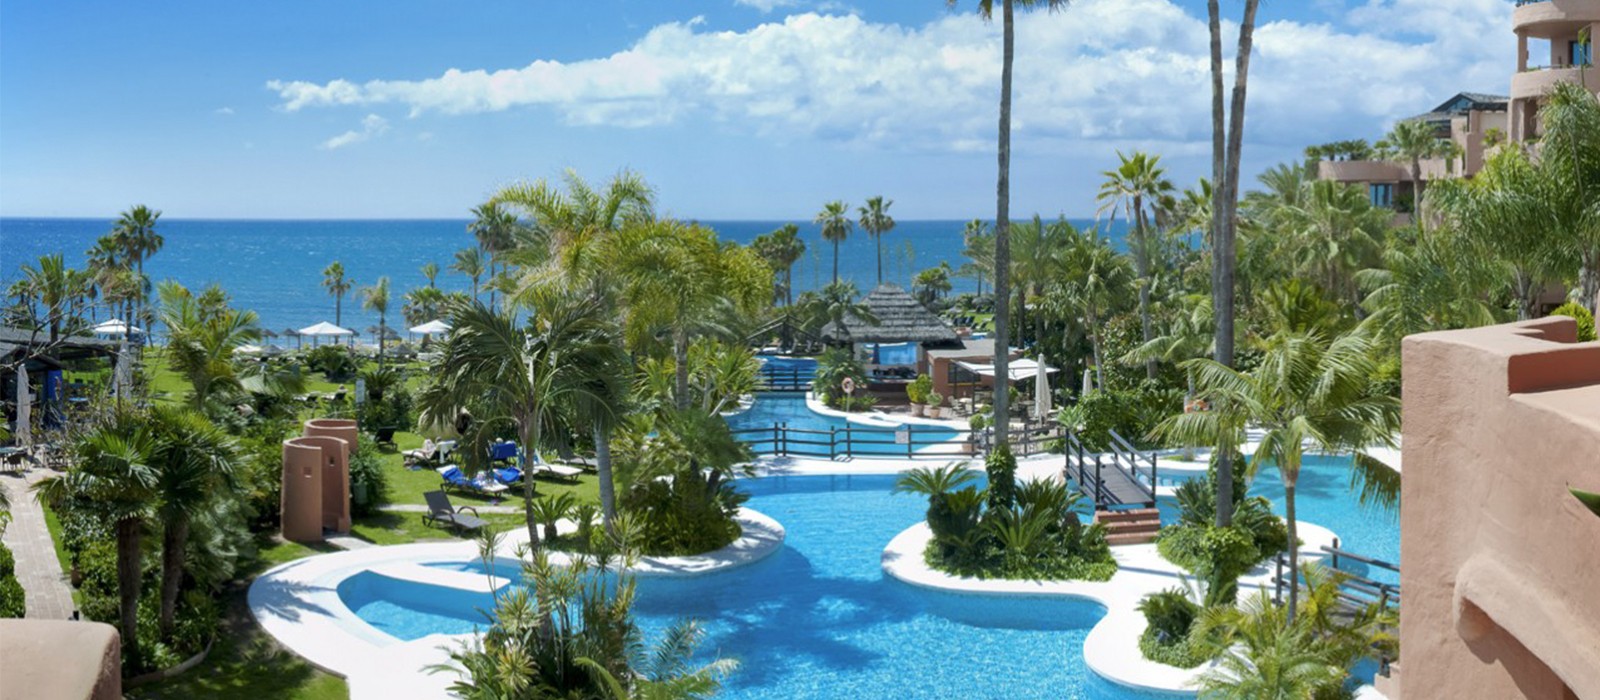 Header - Kempinski Hotel Marbella - Luxuxry Spain Holidays